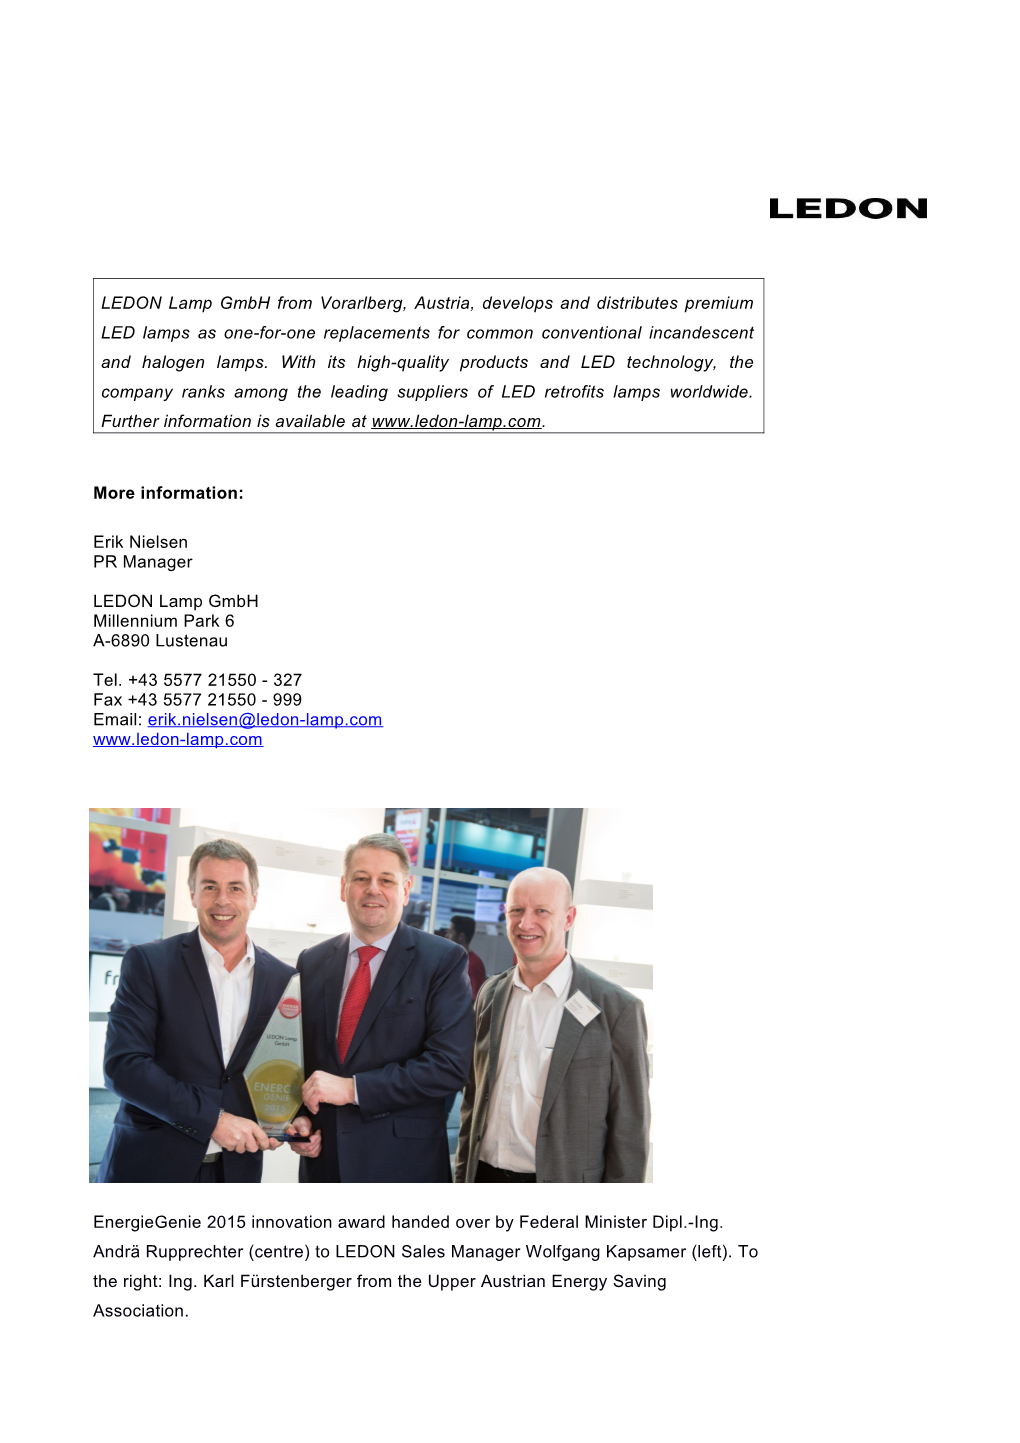 LEDON Wins Energiegenie 2015 Innovation Award